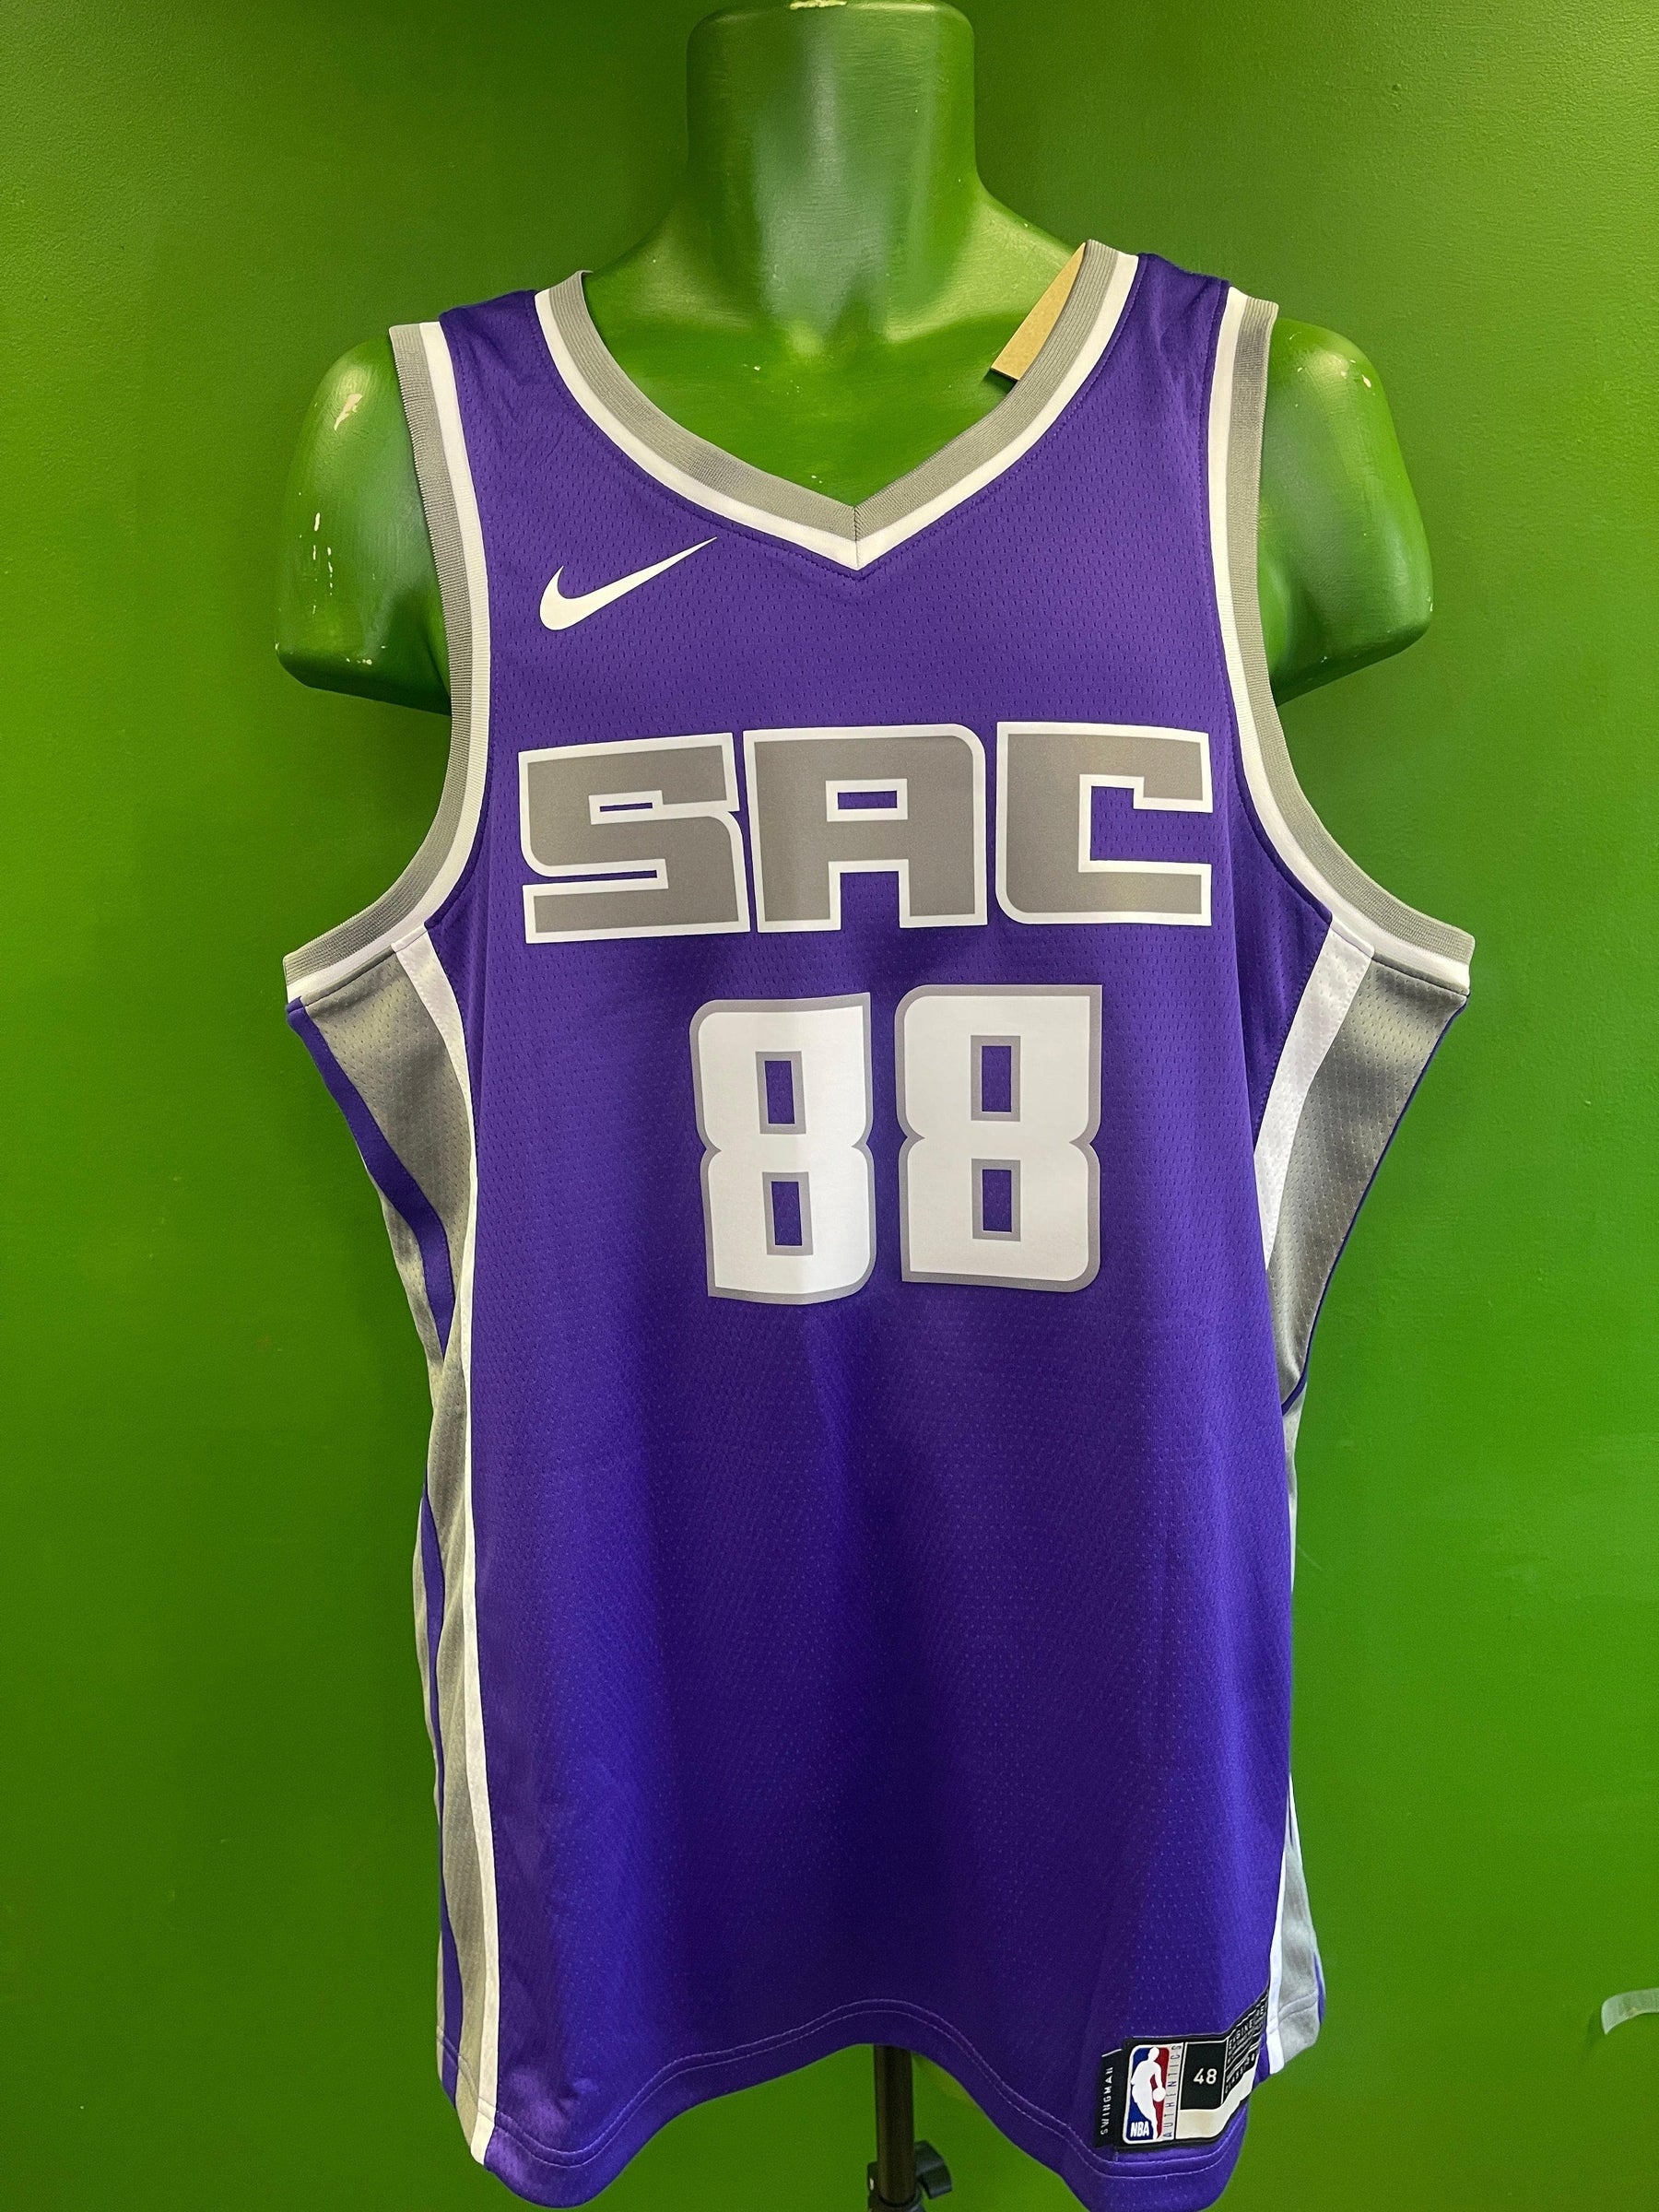 48 Size Sacramento Kings NBA Jerseys for sale